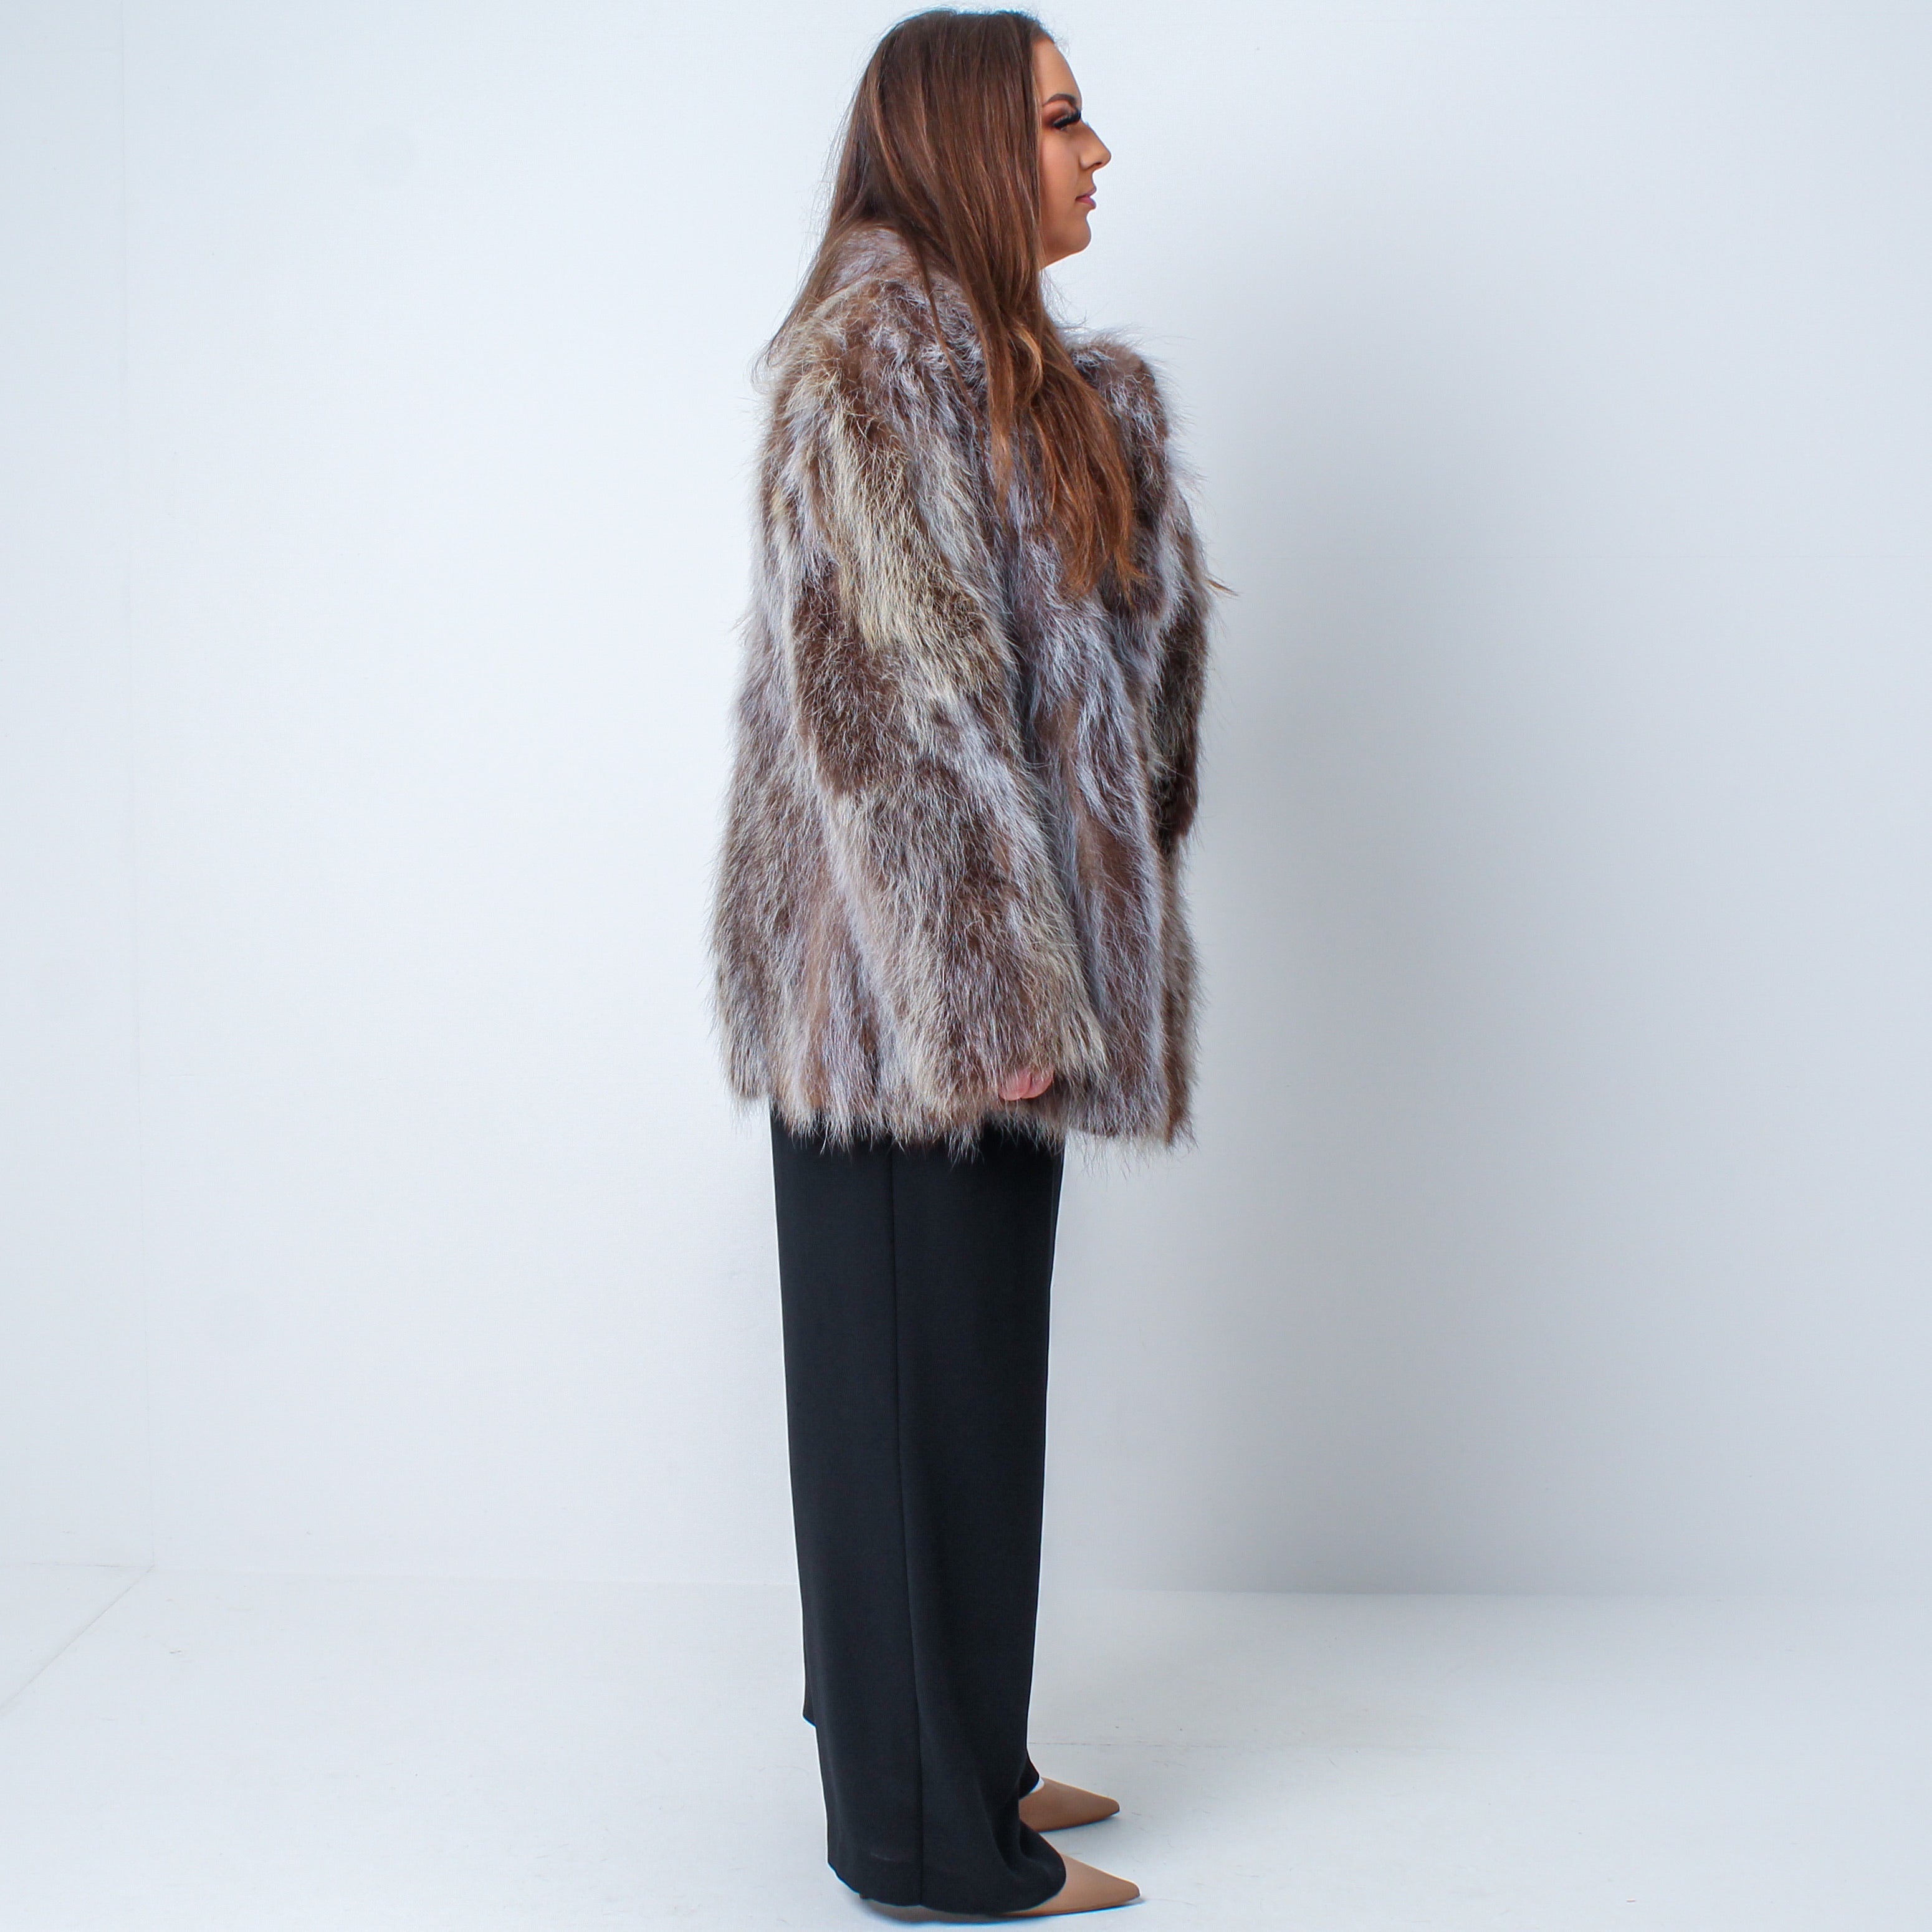 Women’s Vintage Real Natural Fox Fur Coat - Large / XL UK 12-16